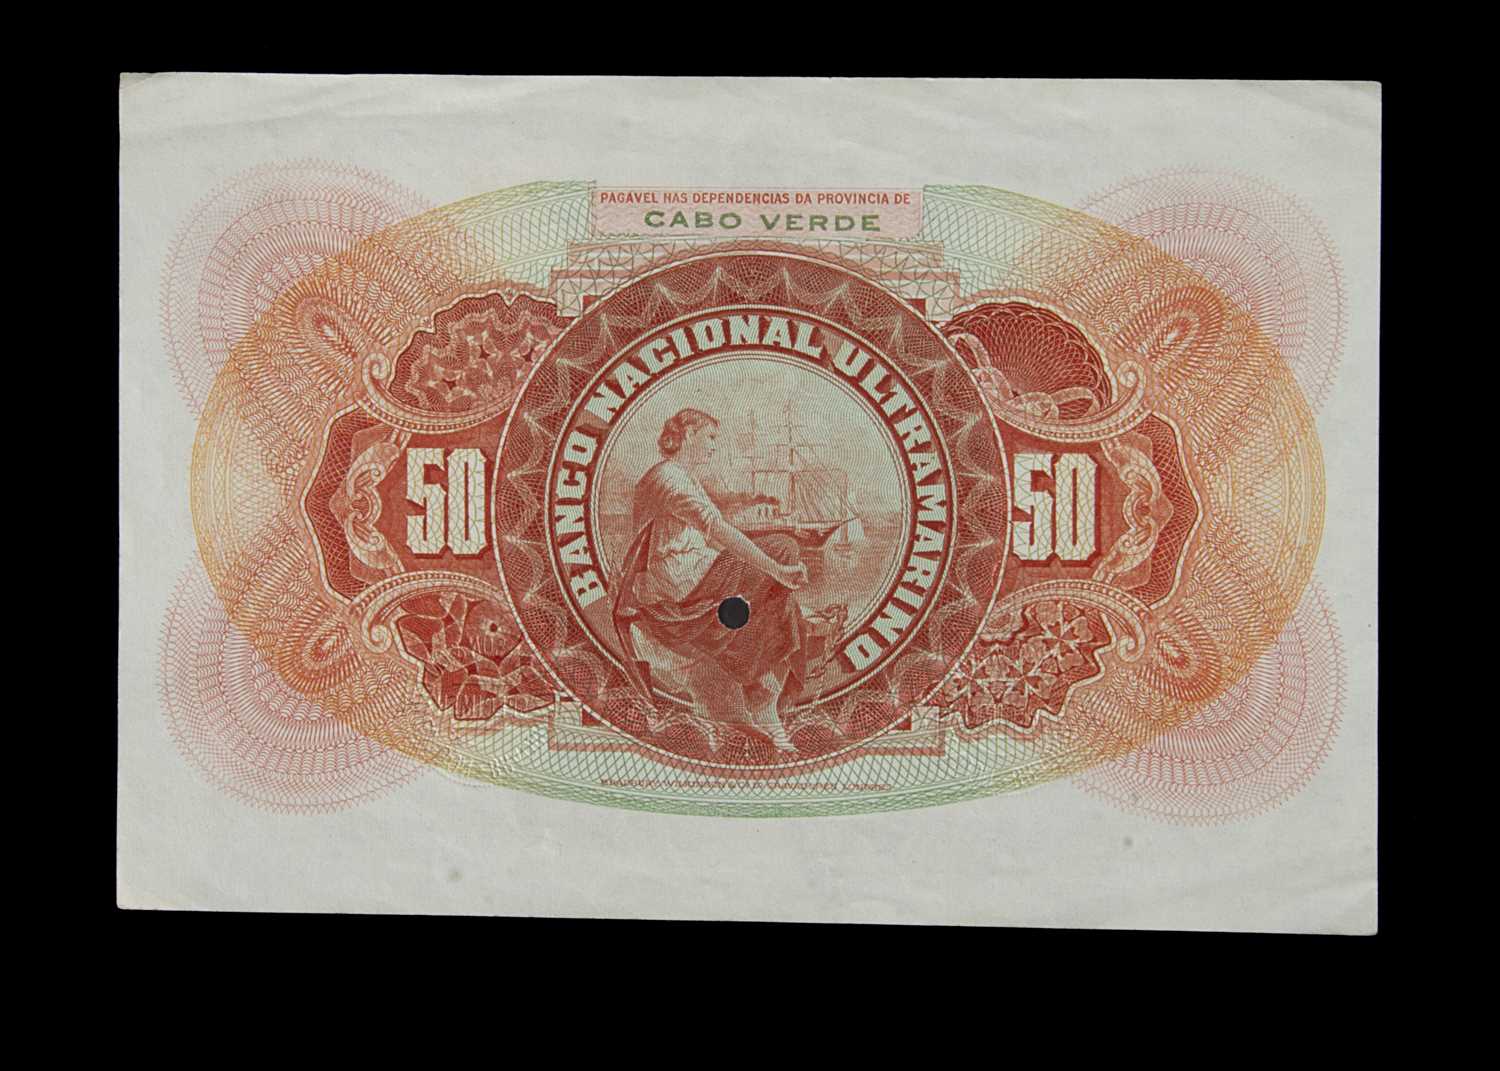 Specimen Bank Note: National Bank Ultramarino specimen 50 Escudos, - Image 2 of 2